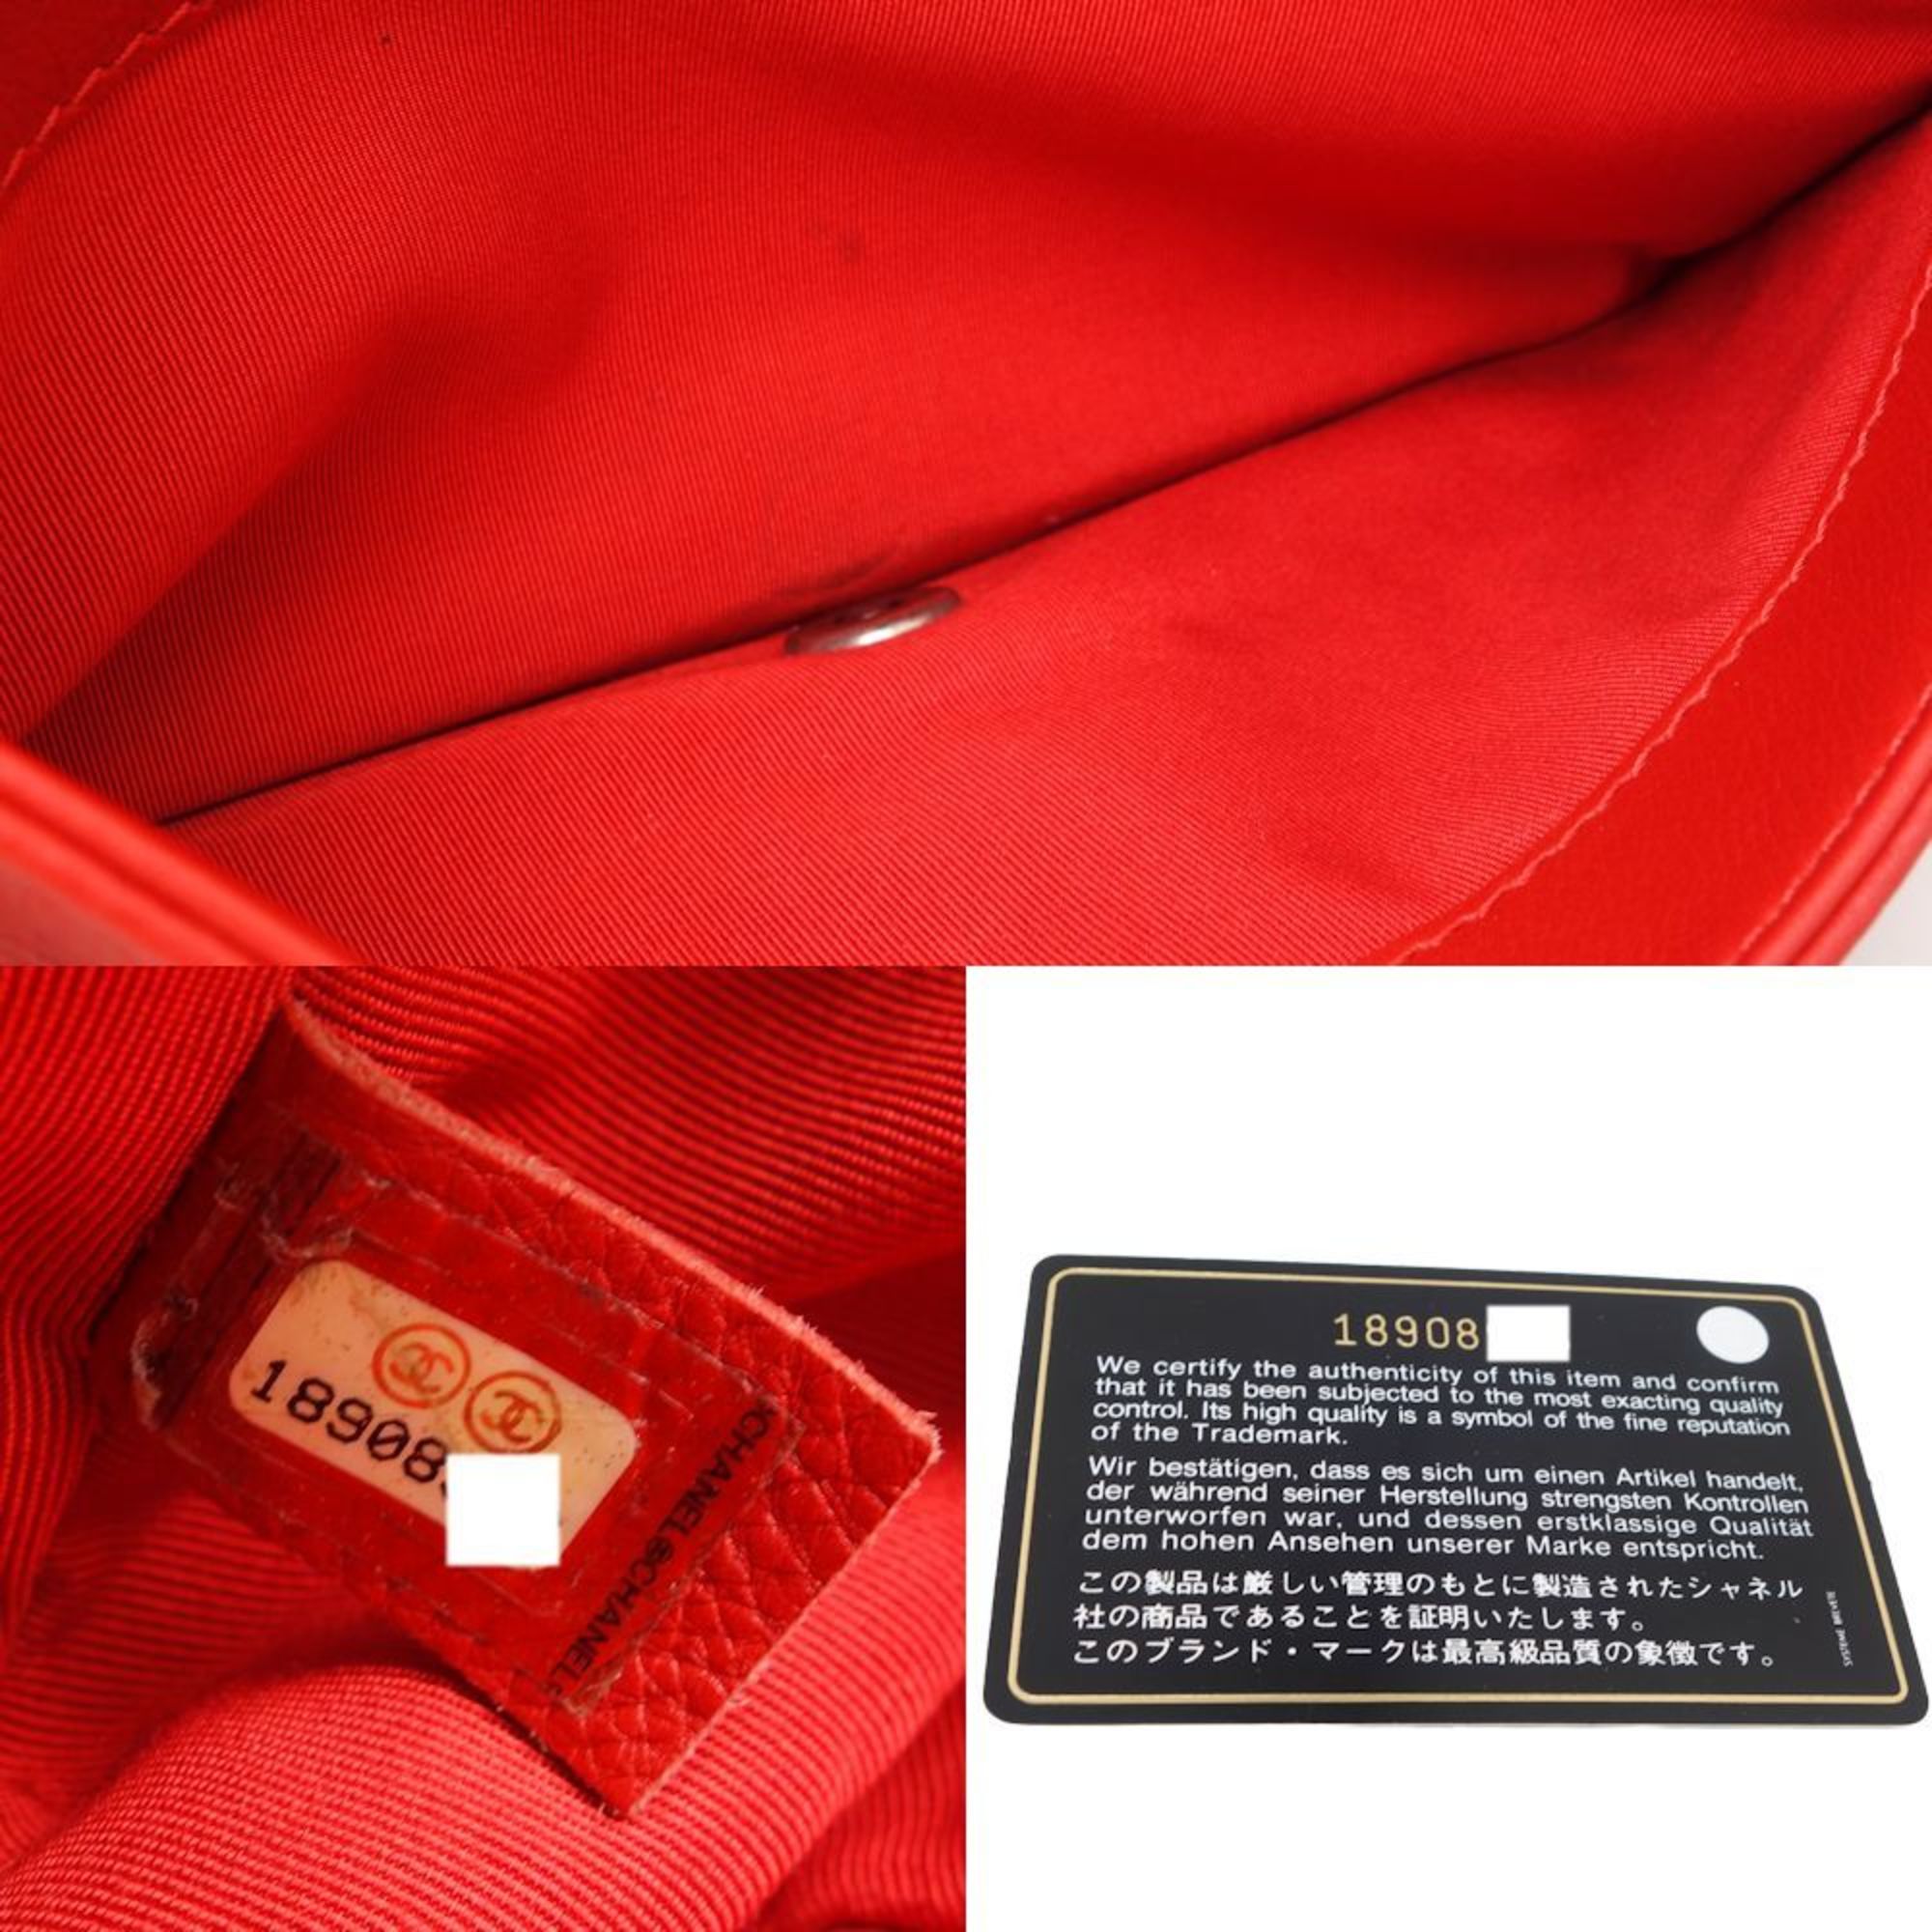 CHANEL Boy Chanel Chain Shoulder Crossbody Bag Lambskin Red 450070